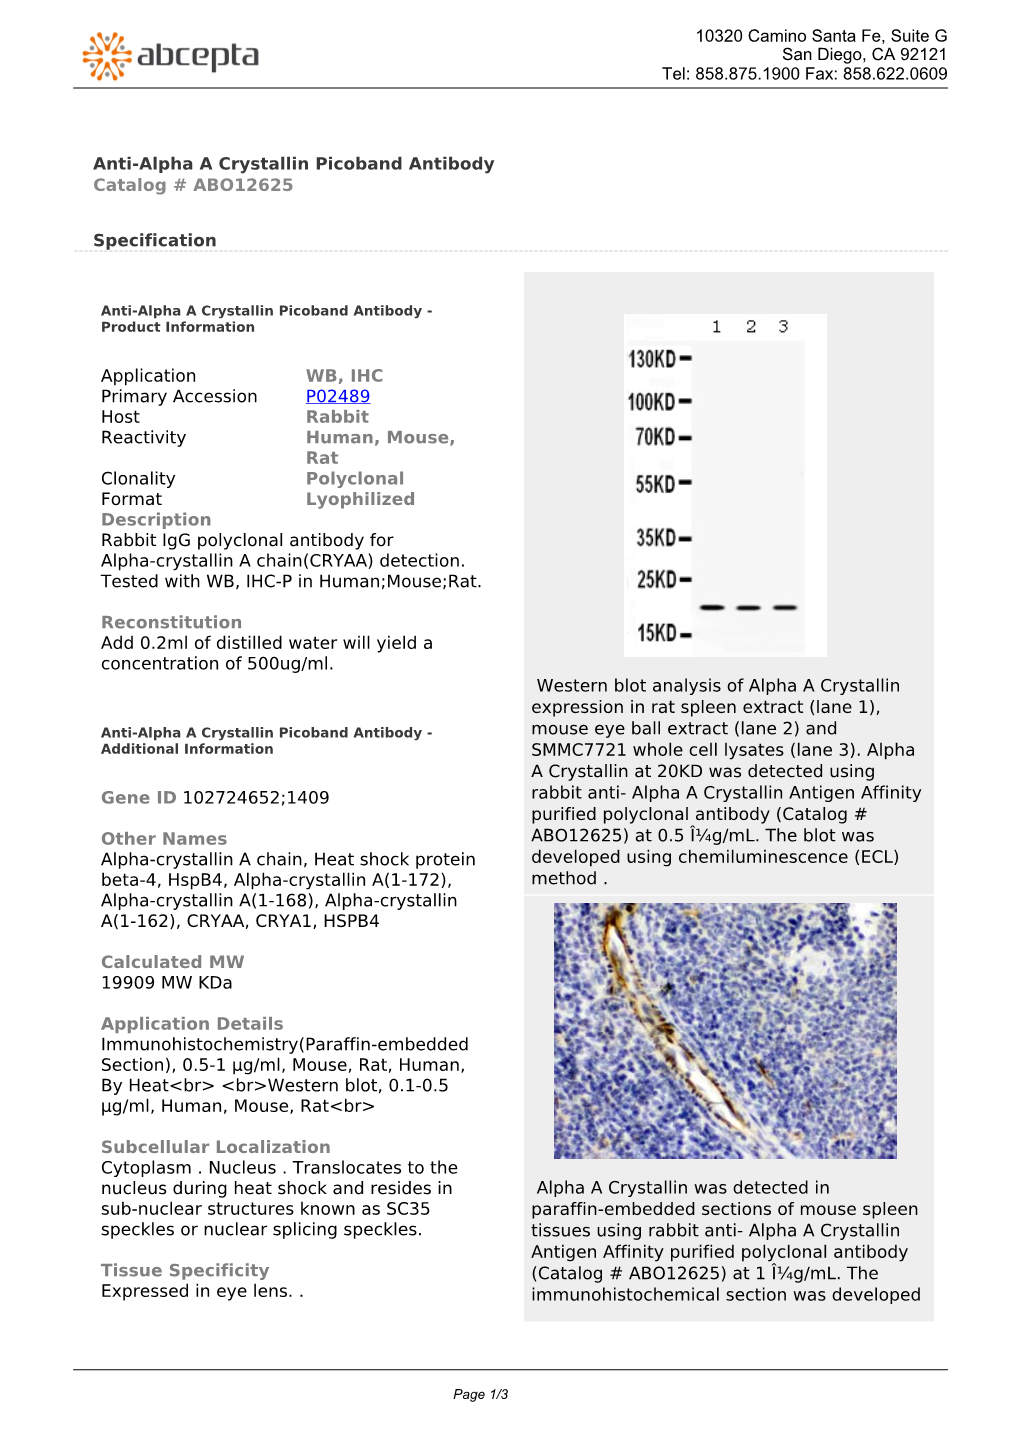 Anti-Alpha a Crystallin Picoband Antibody Catalog # ABO12625